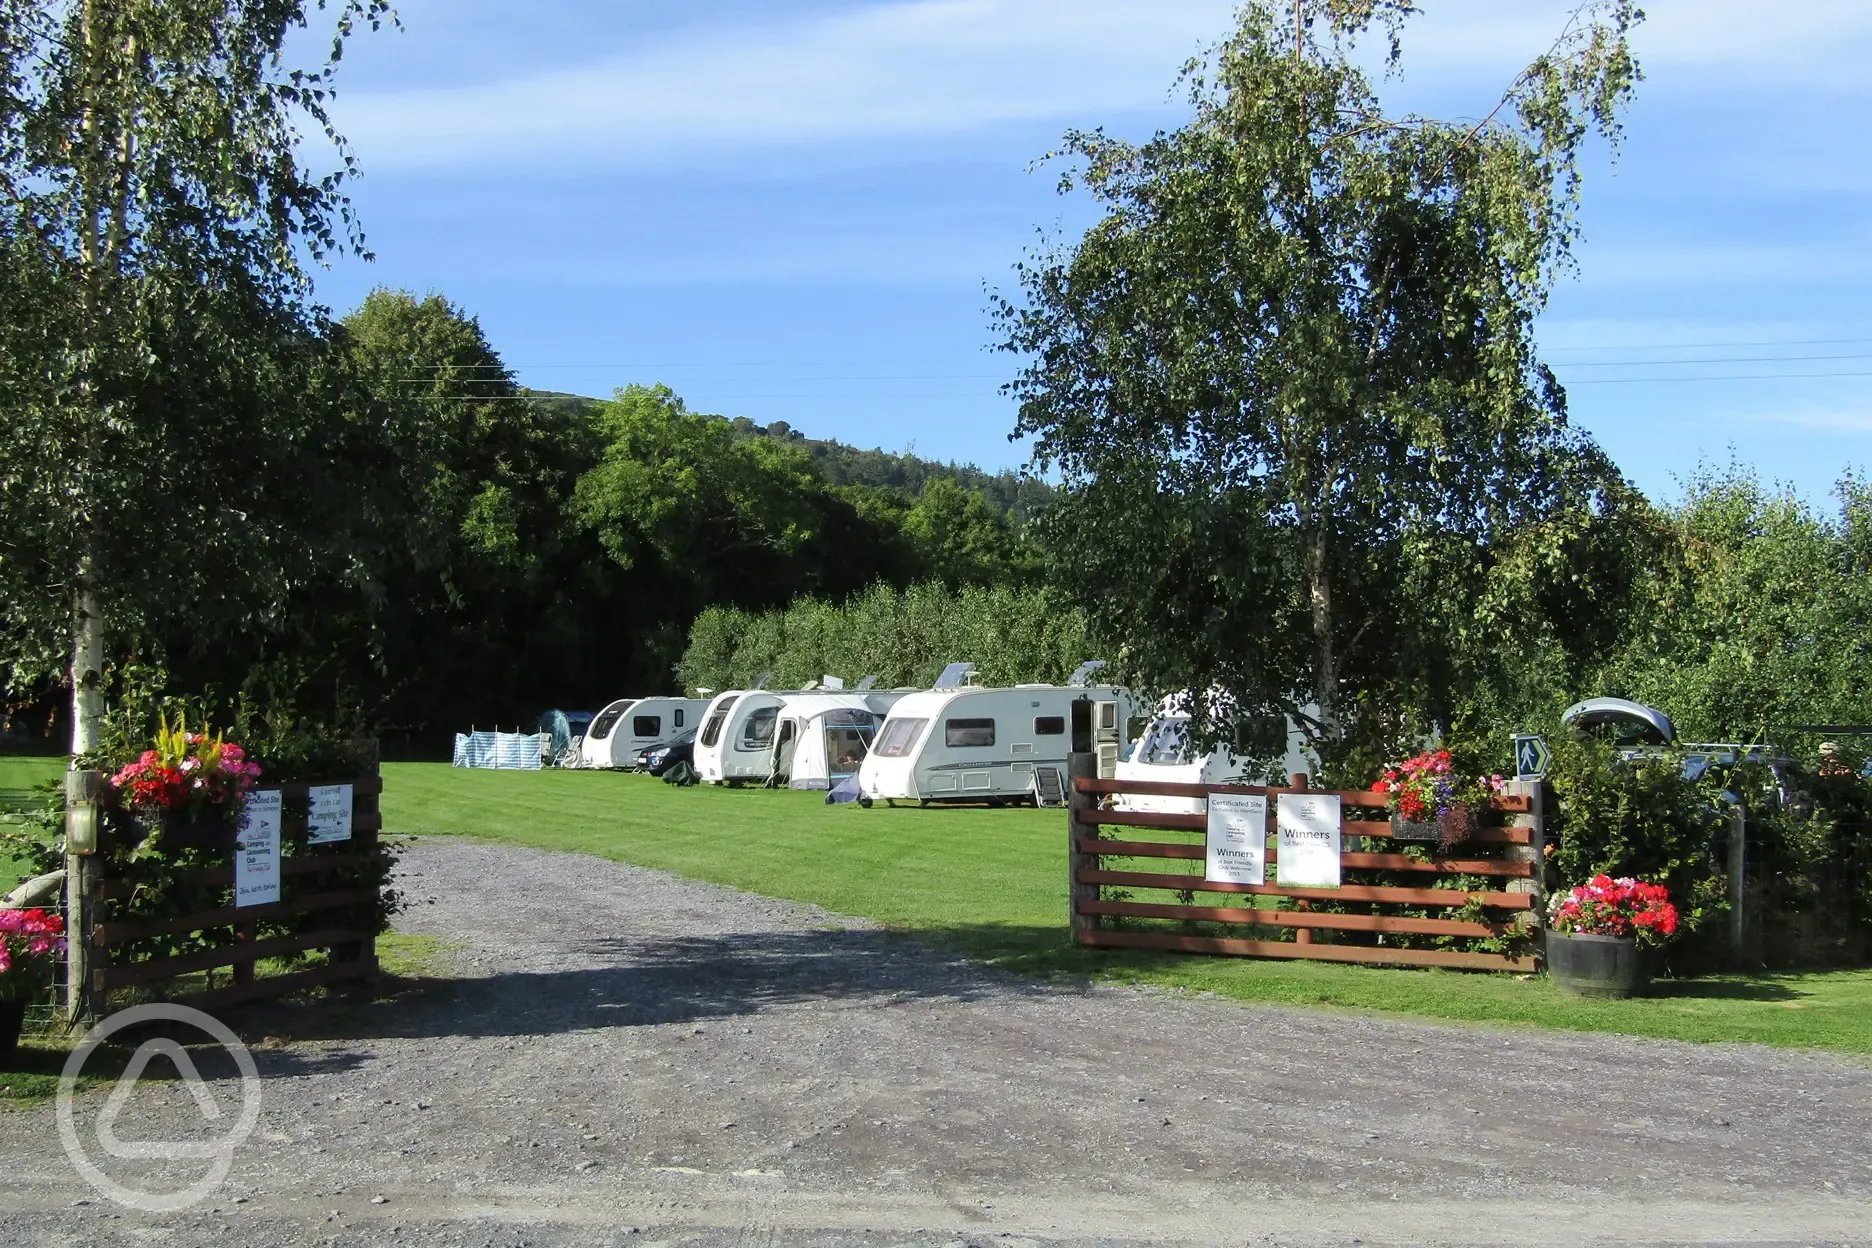 Cefn Cae Caravan and Camping Site